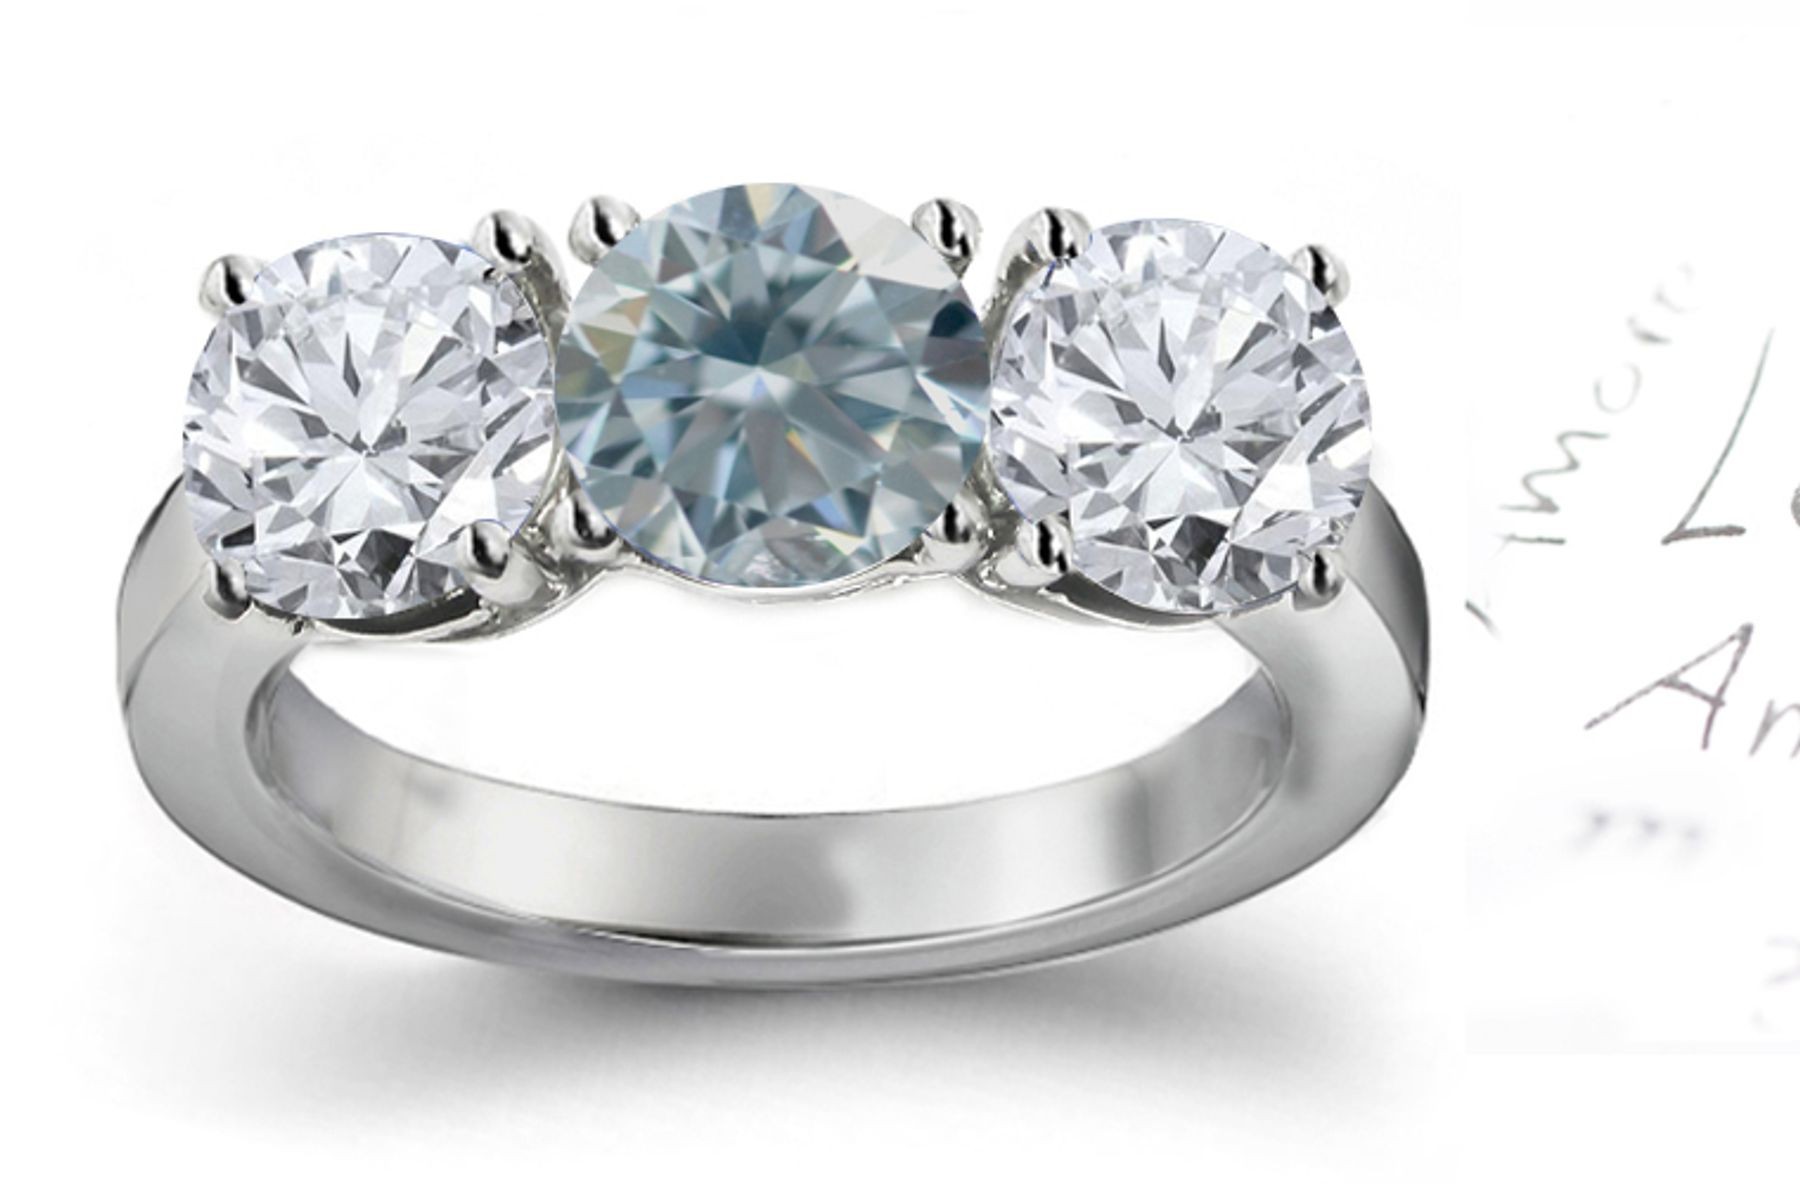 Premier Colored Diamonds Designer Collection - Blue Colored Diamonds & White Diamonds Fancy Blue Diamond Engagement Rings